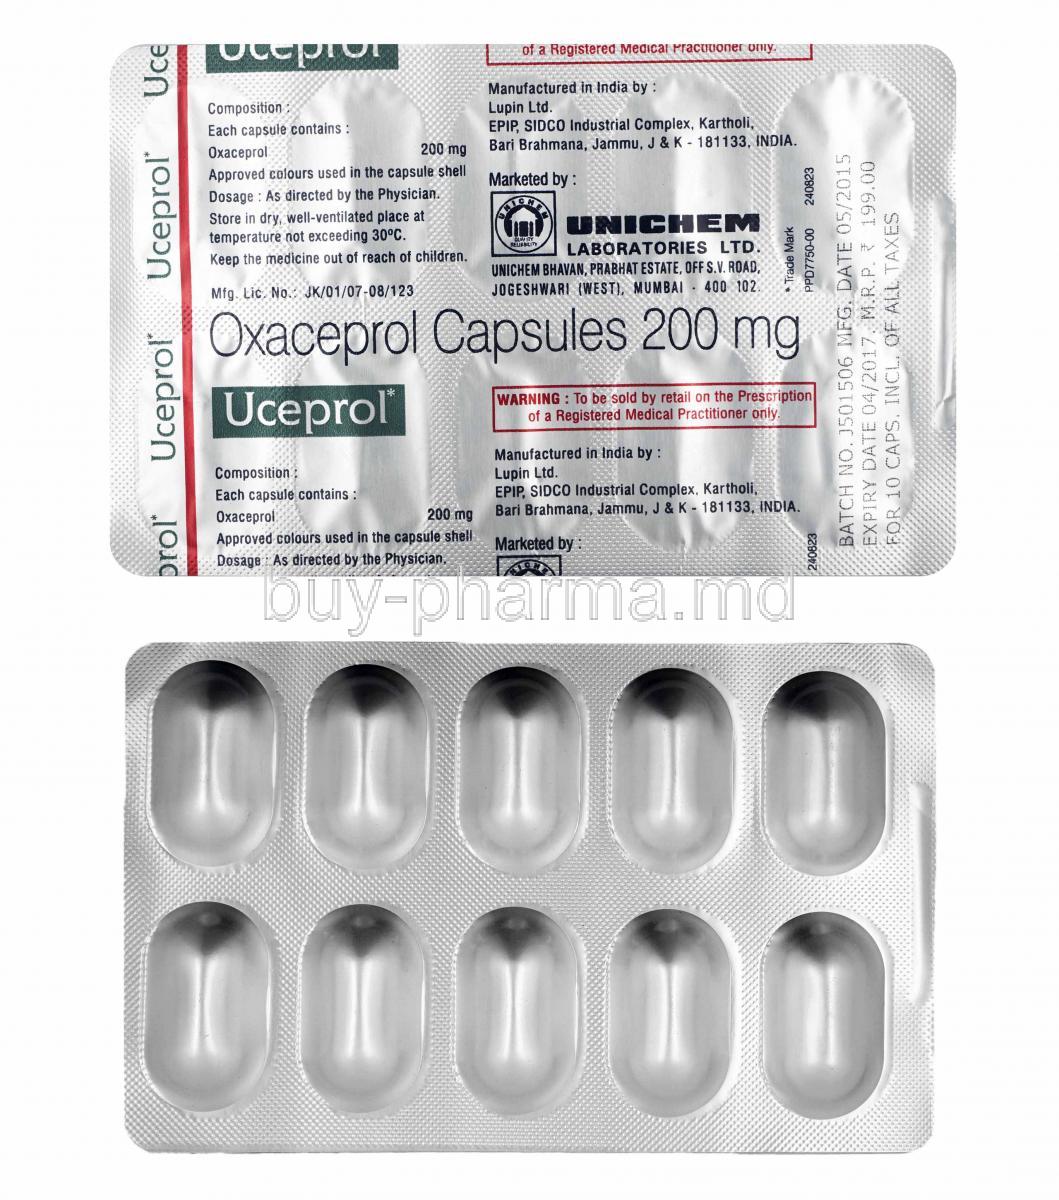 Uceprol, Oxaceprol capsules